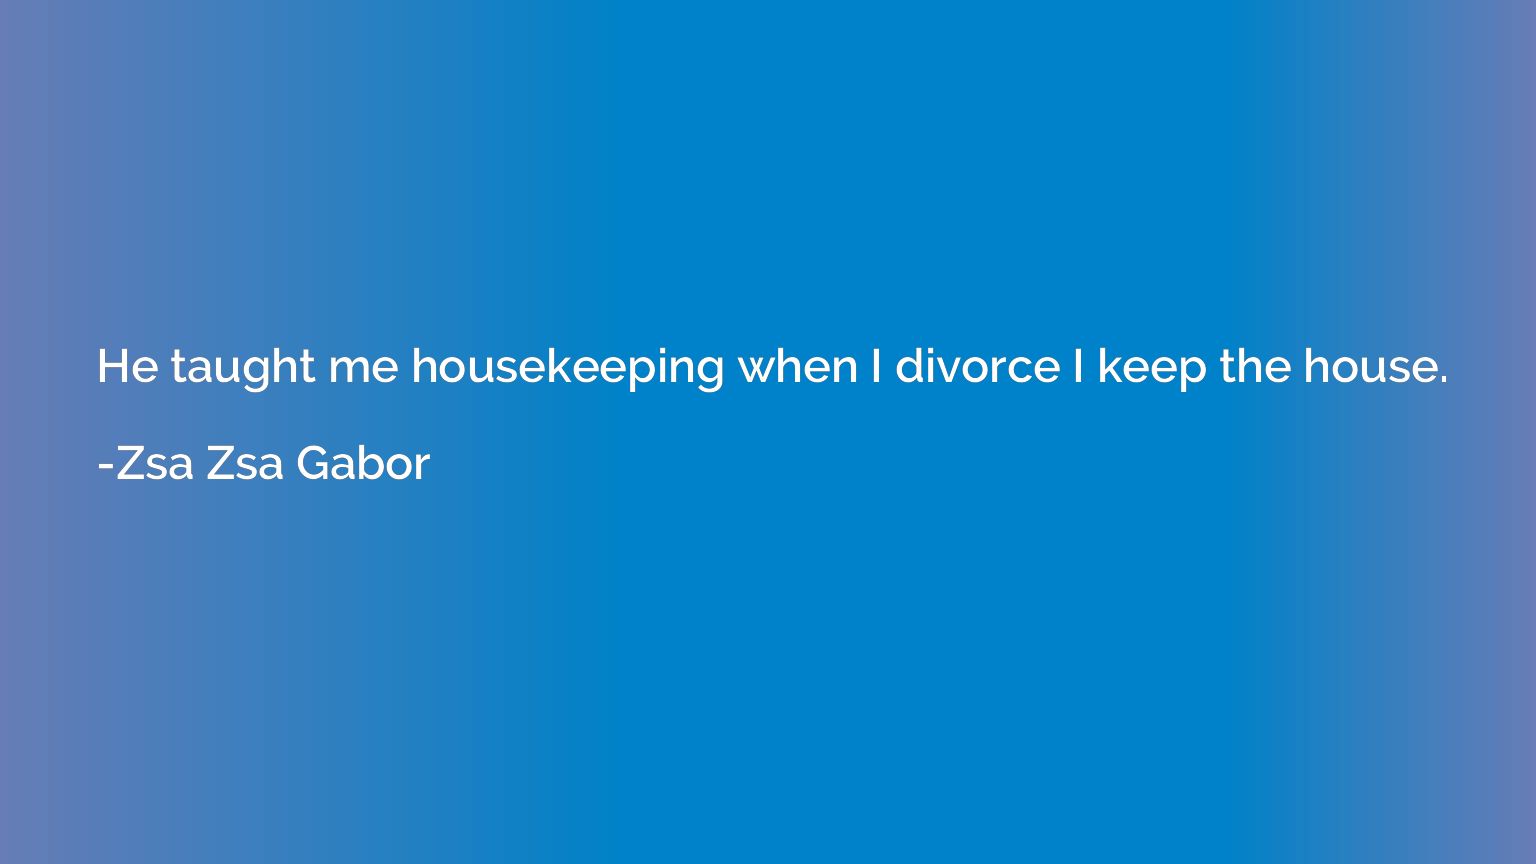 He taught me housekeeping when I divorce I keep the house.